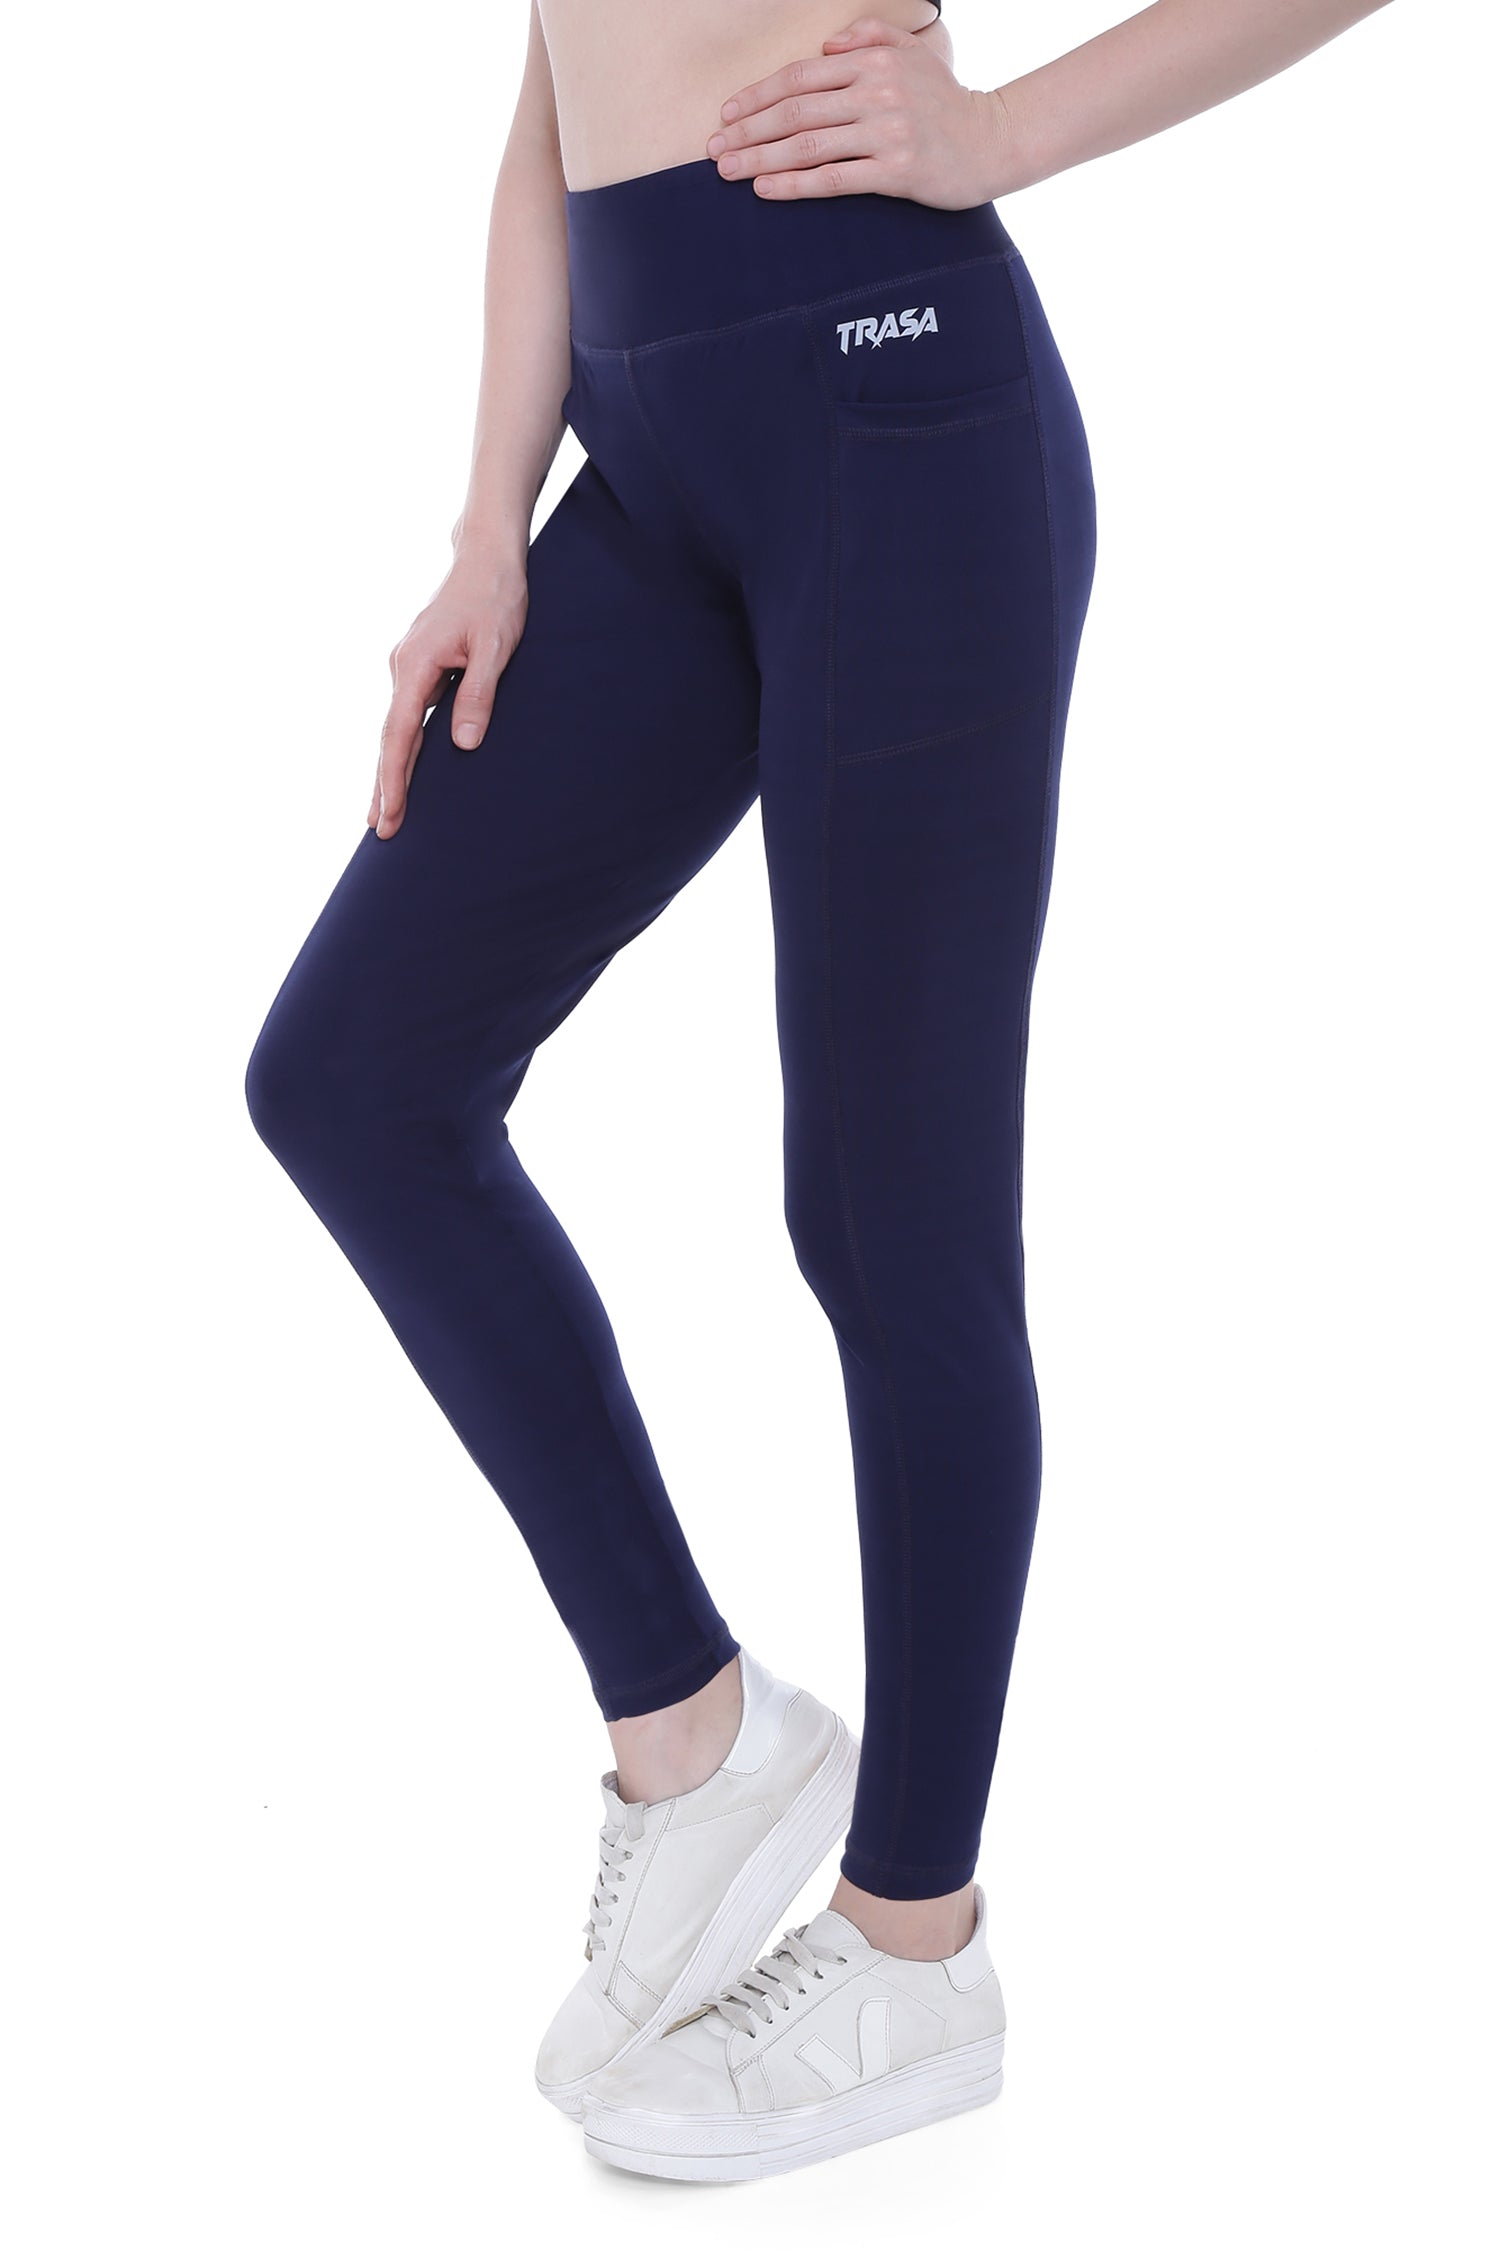 Dark blue gym leggings for women, ankle length sports pants, gym tights.